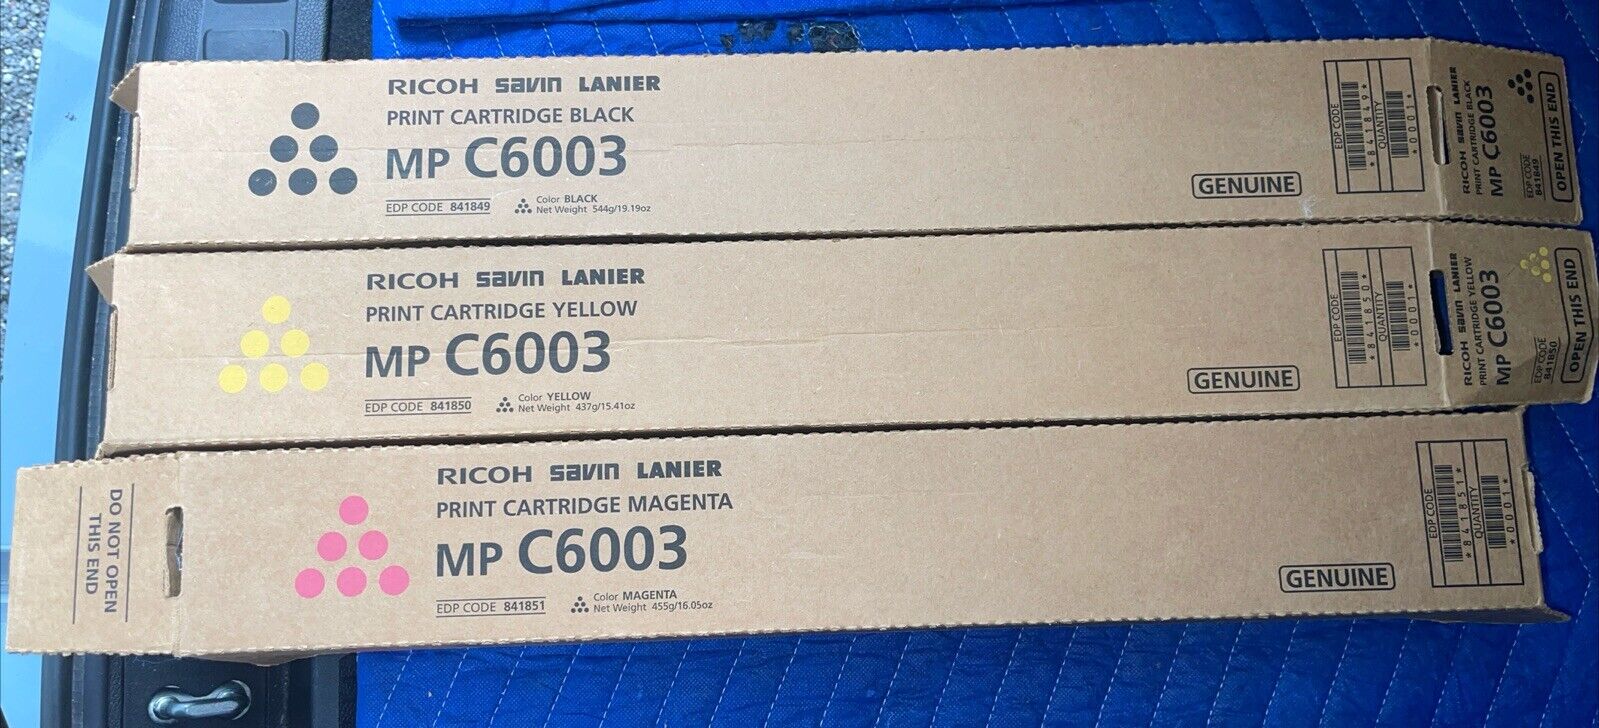 Ricoh Savin Lanier MP C6003 toner set New sealed boxes